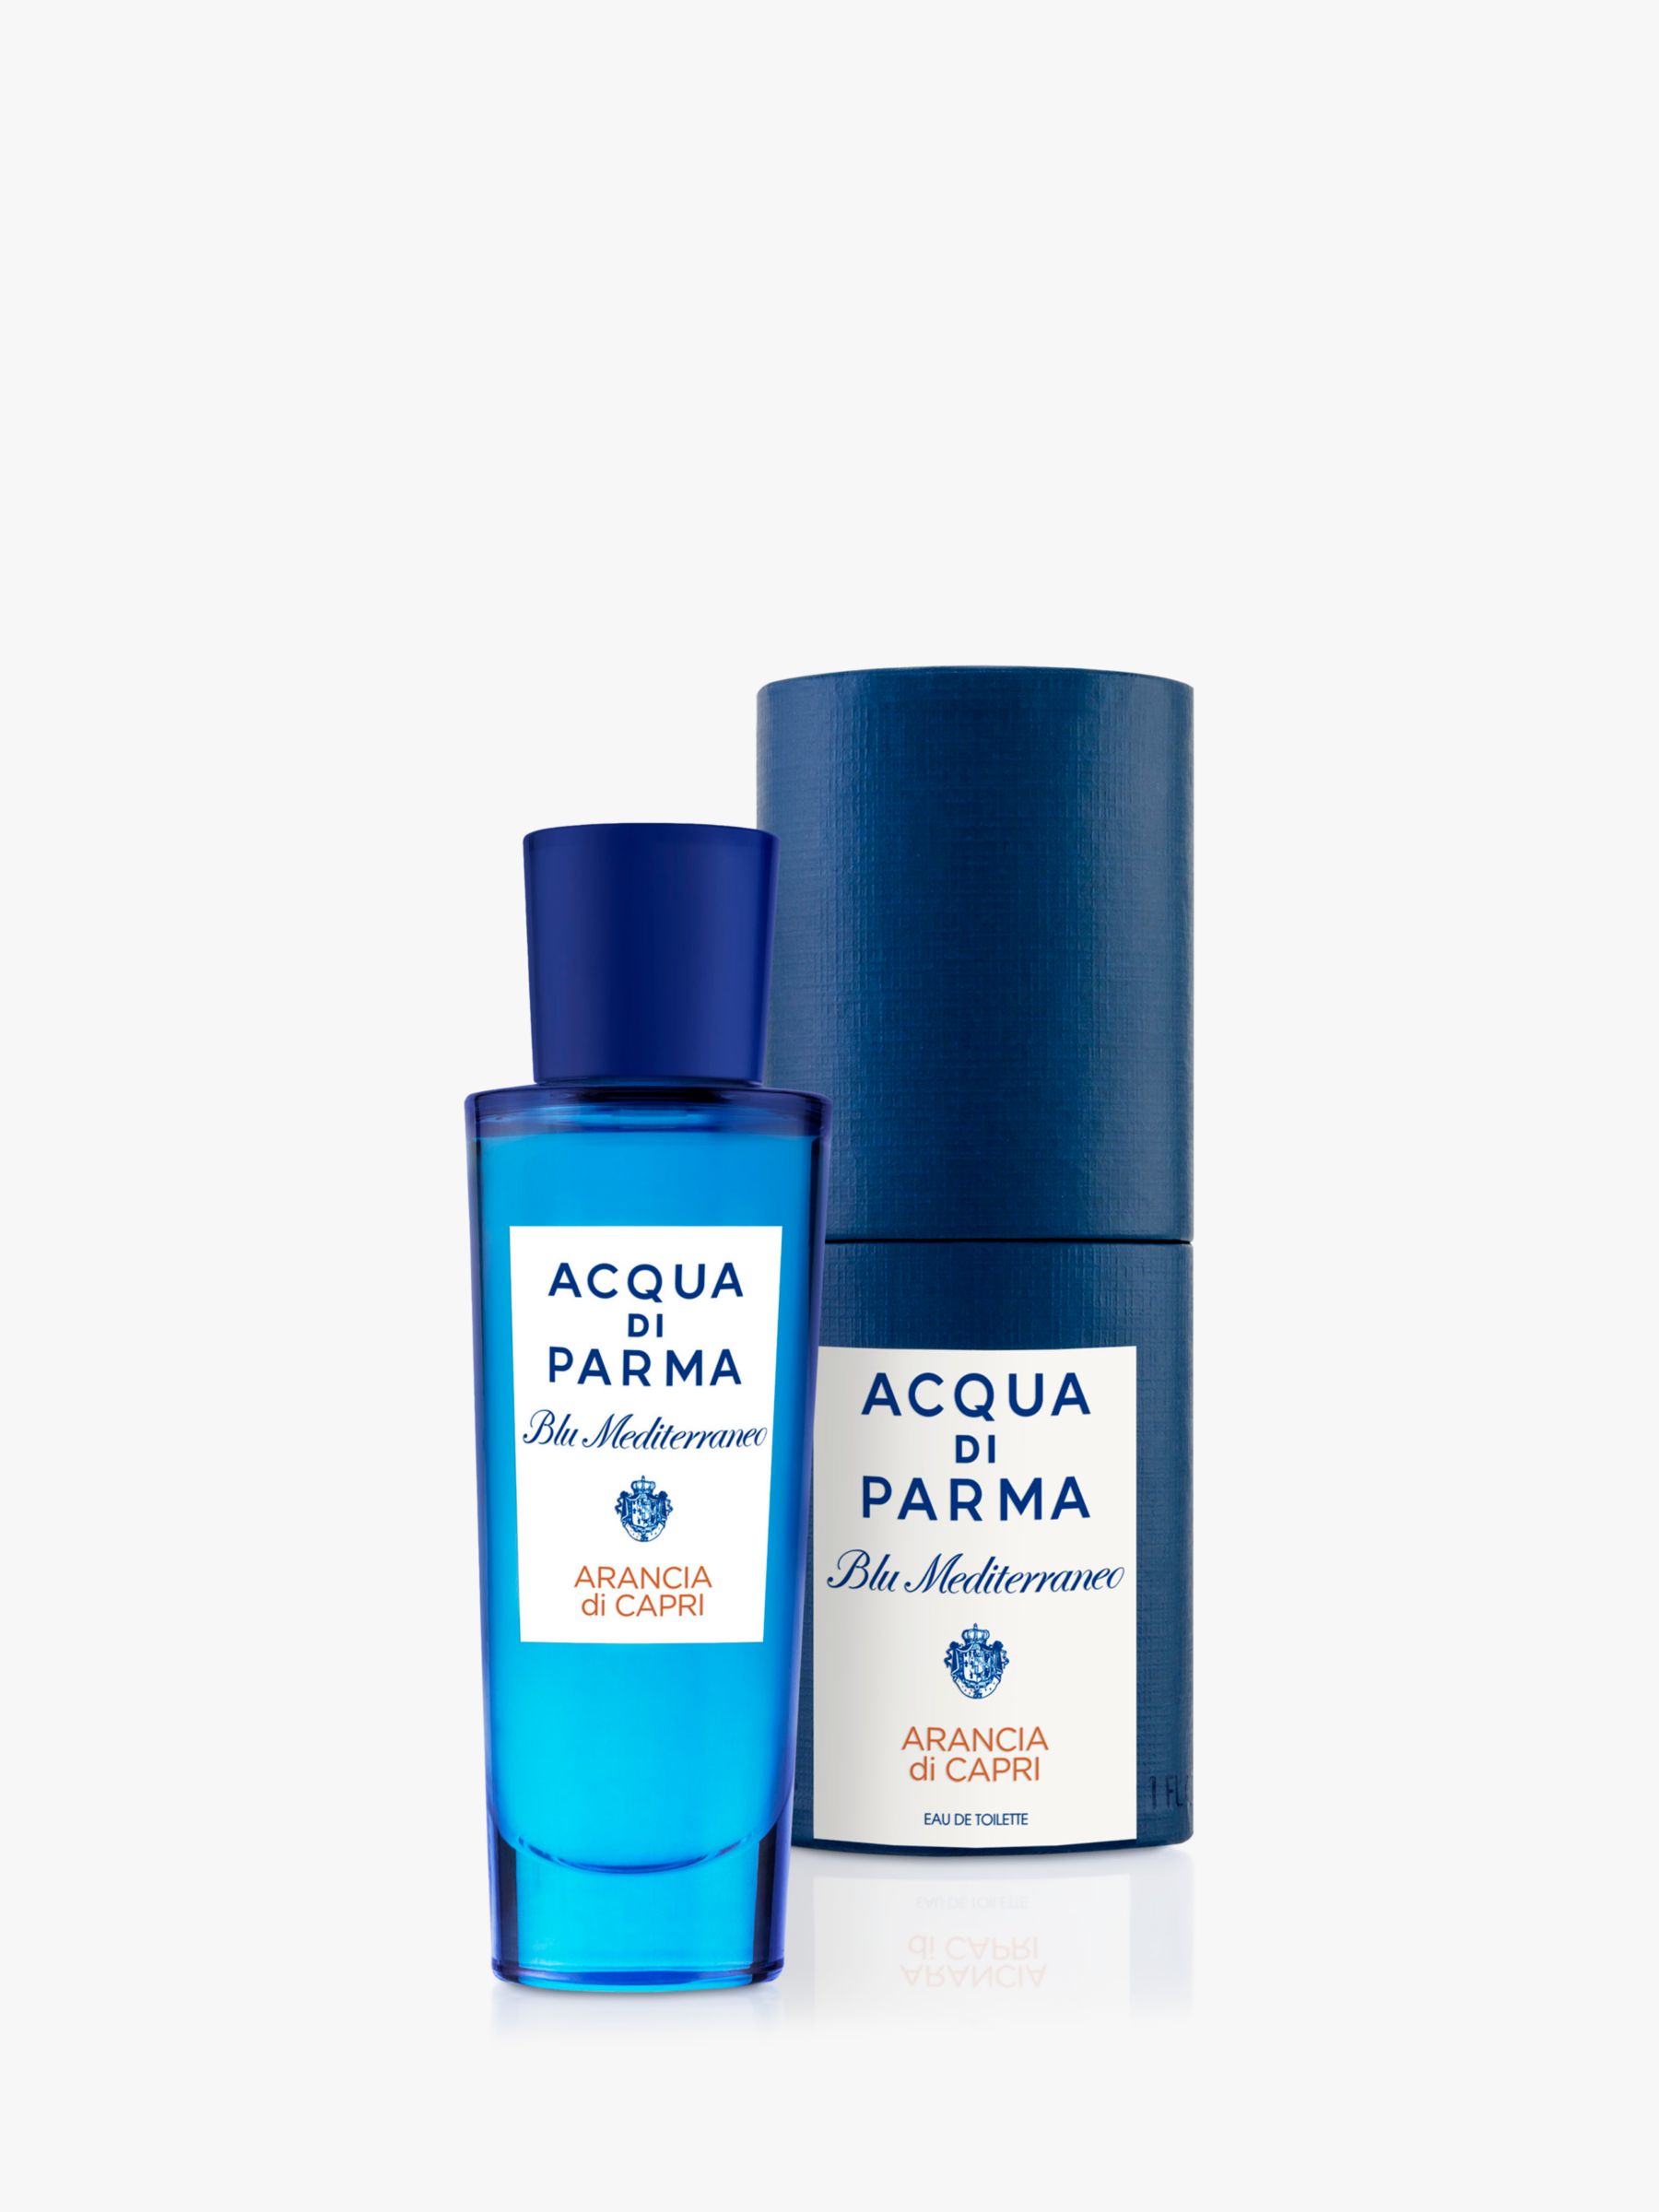 Acqua Di Parma Blu Mediterraneo Arancia Di Capri Eau De Toilette Spray 30ml At John Lewis Partners